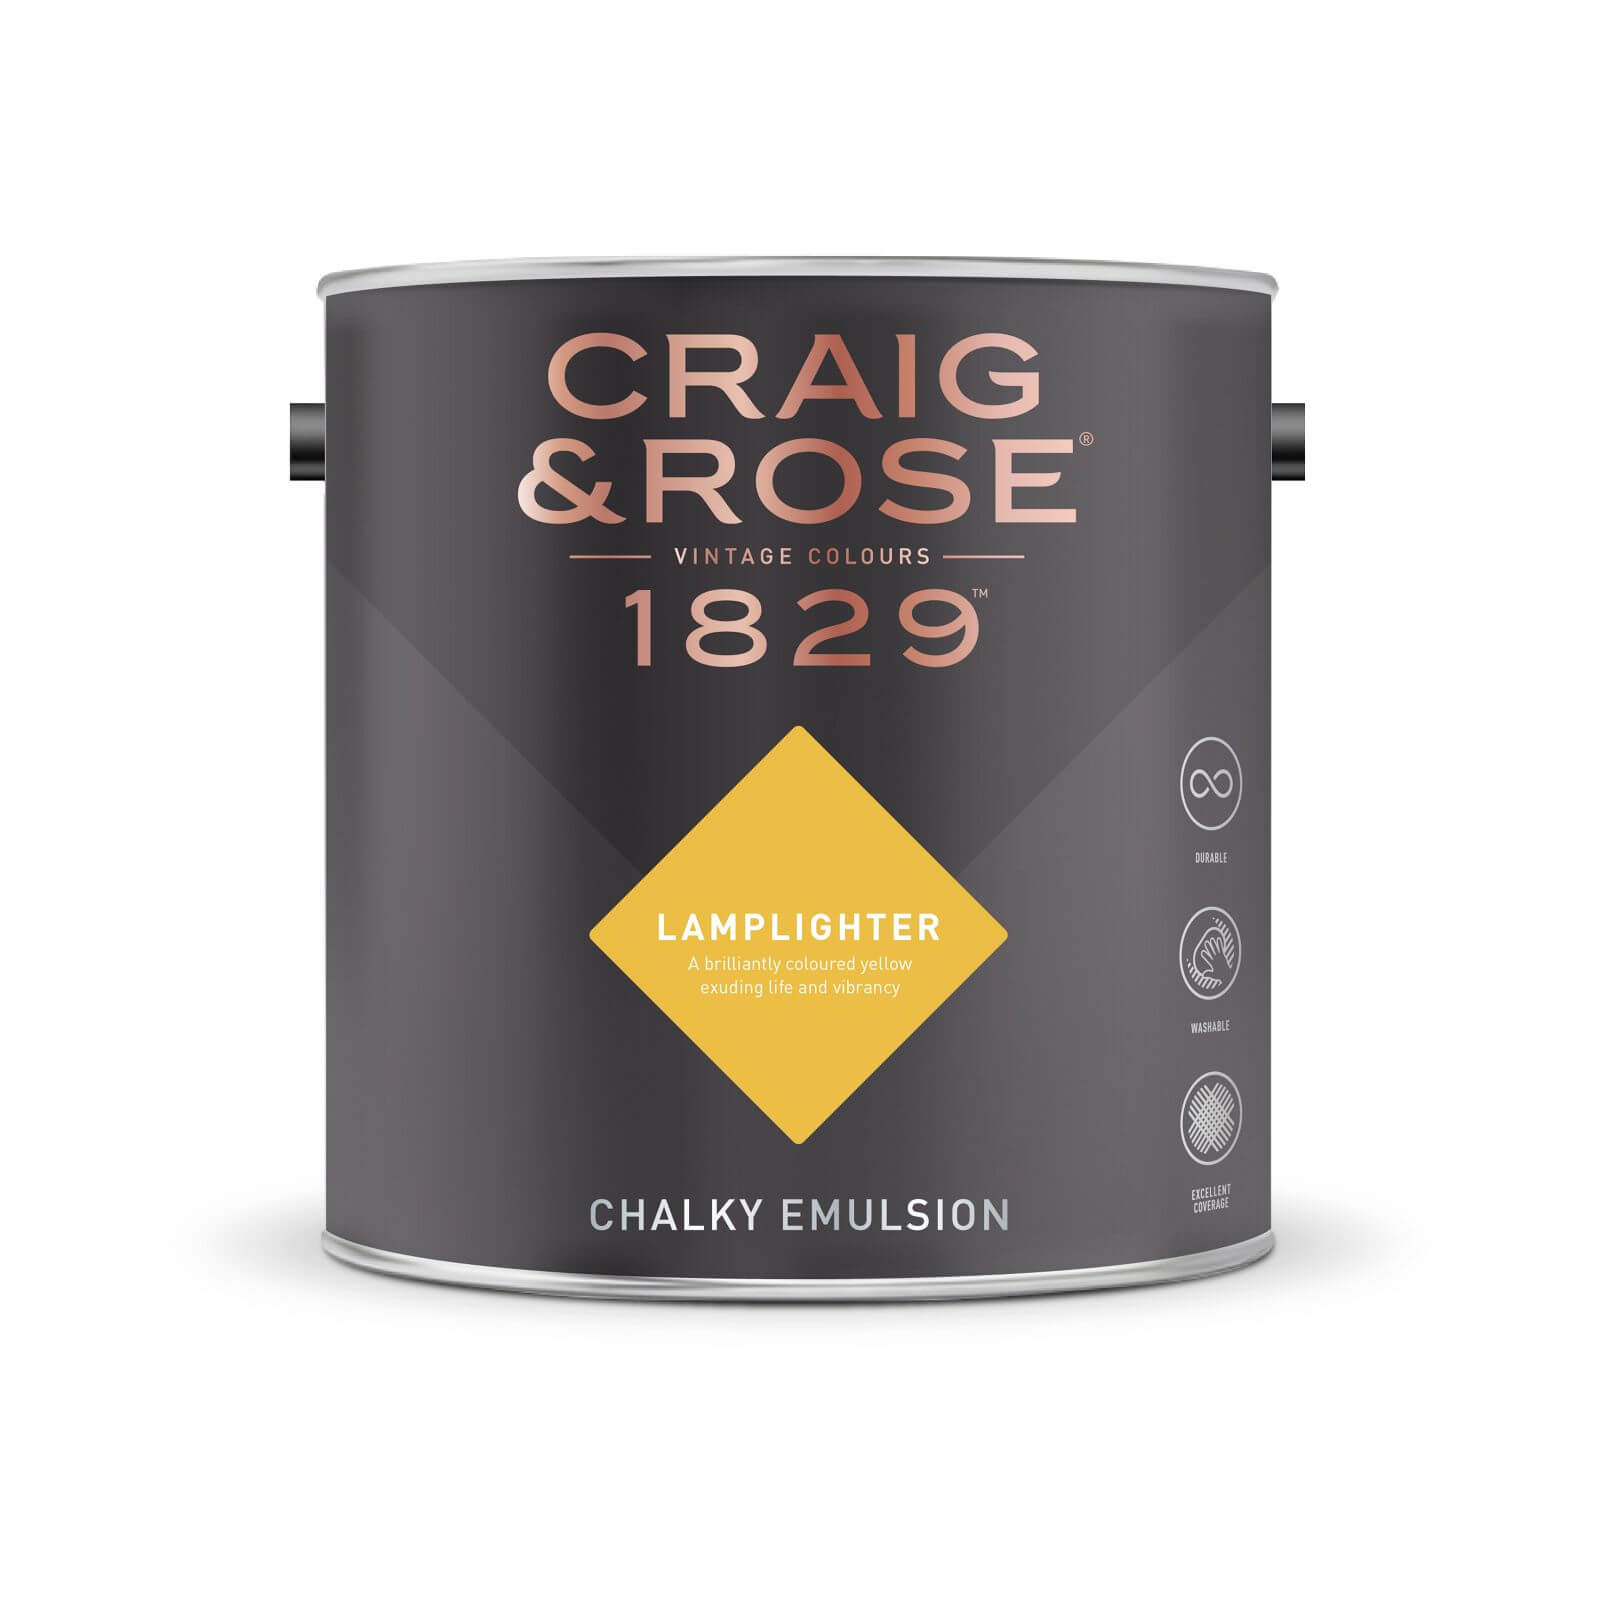 Craig & Rose 1829 Chalky Emulsion Paint Lamplighter - Tester 50ml